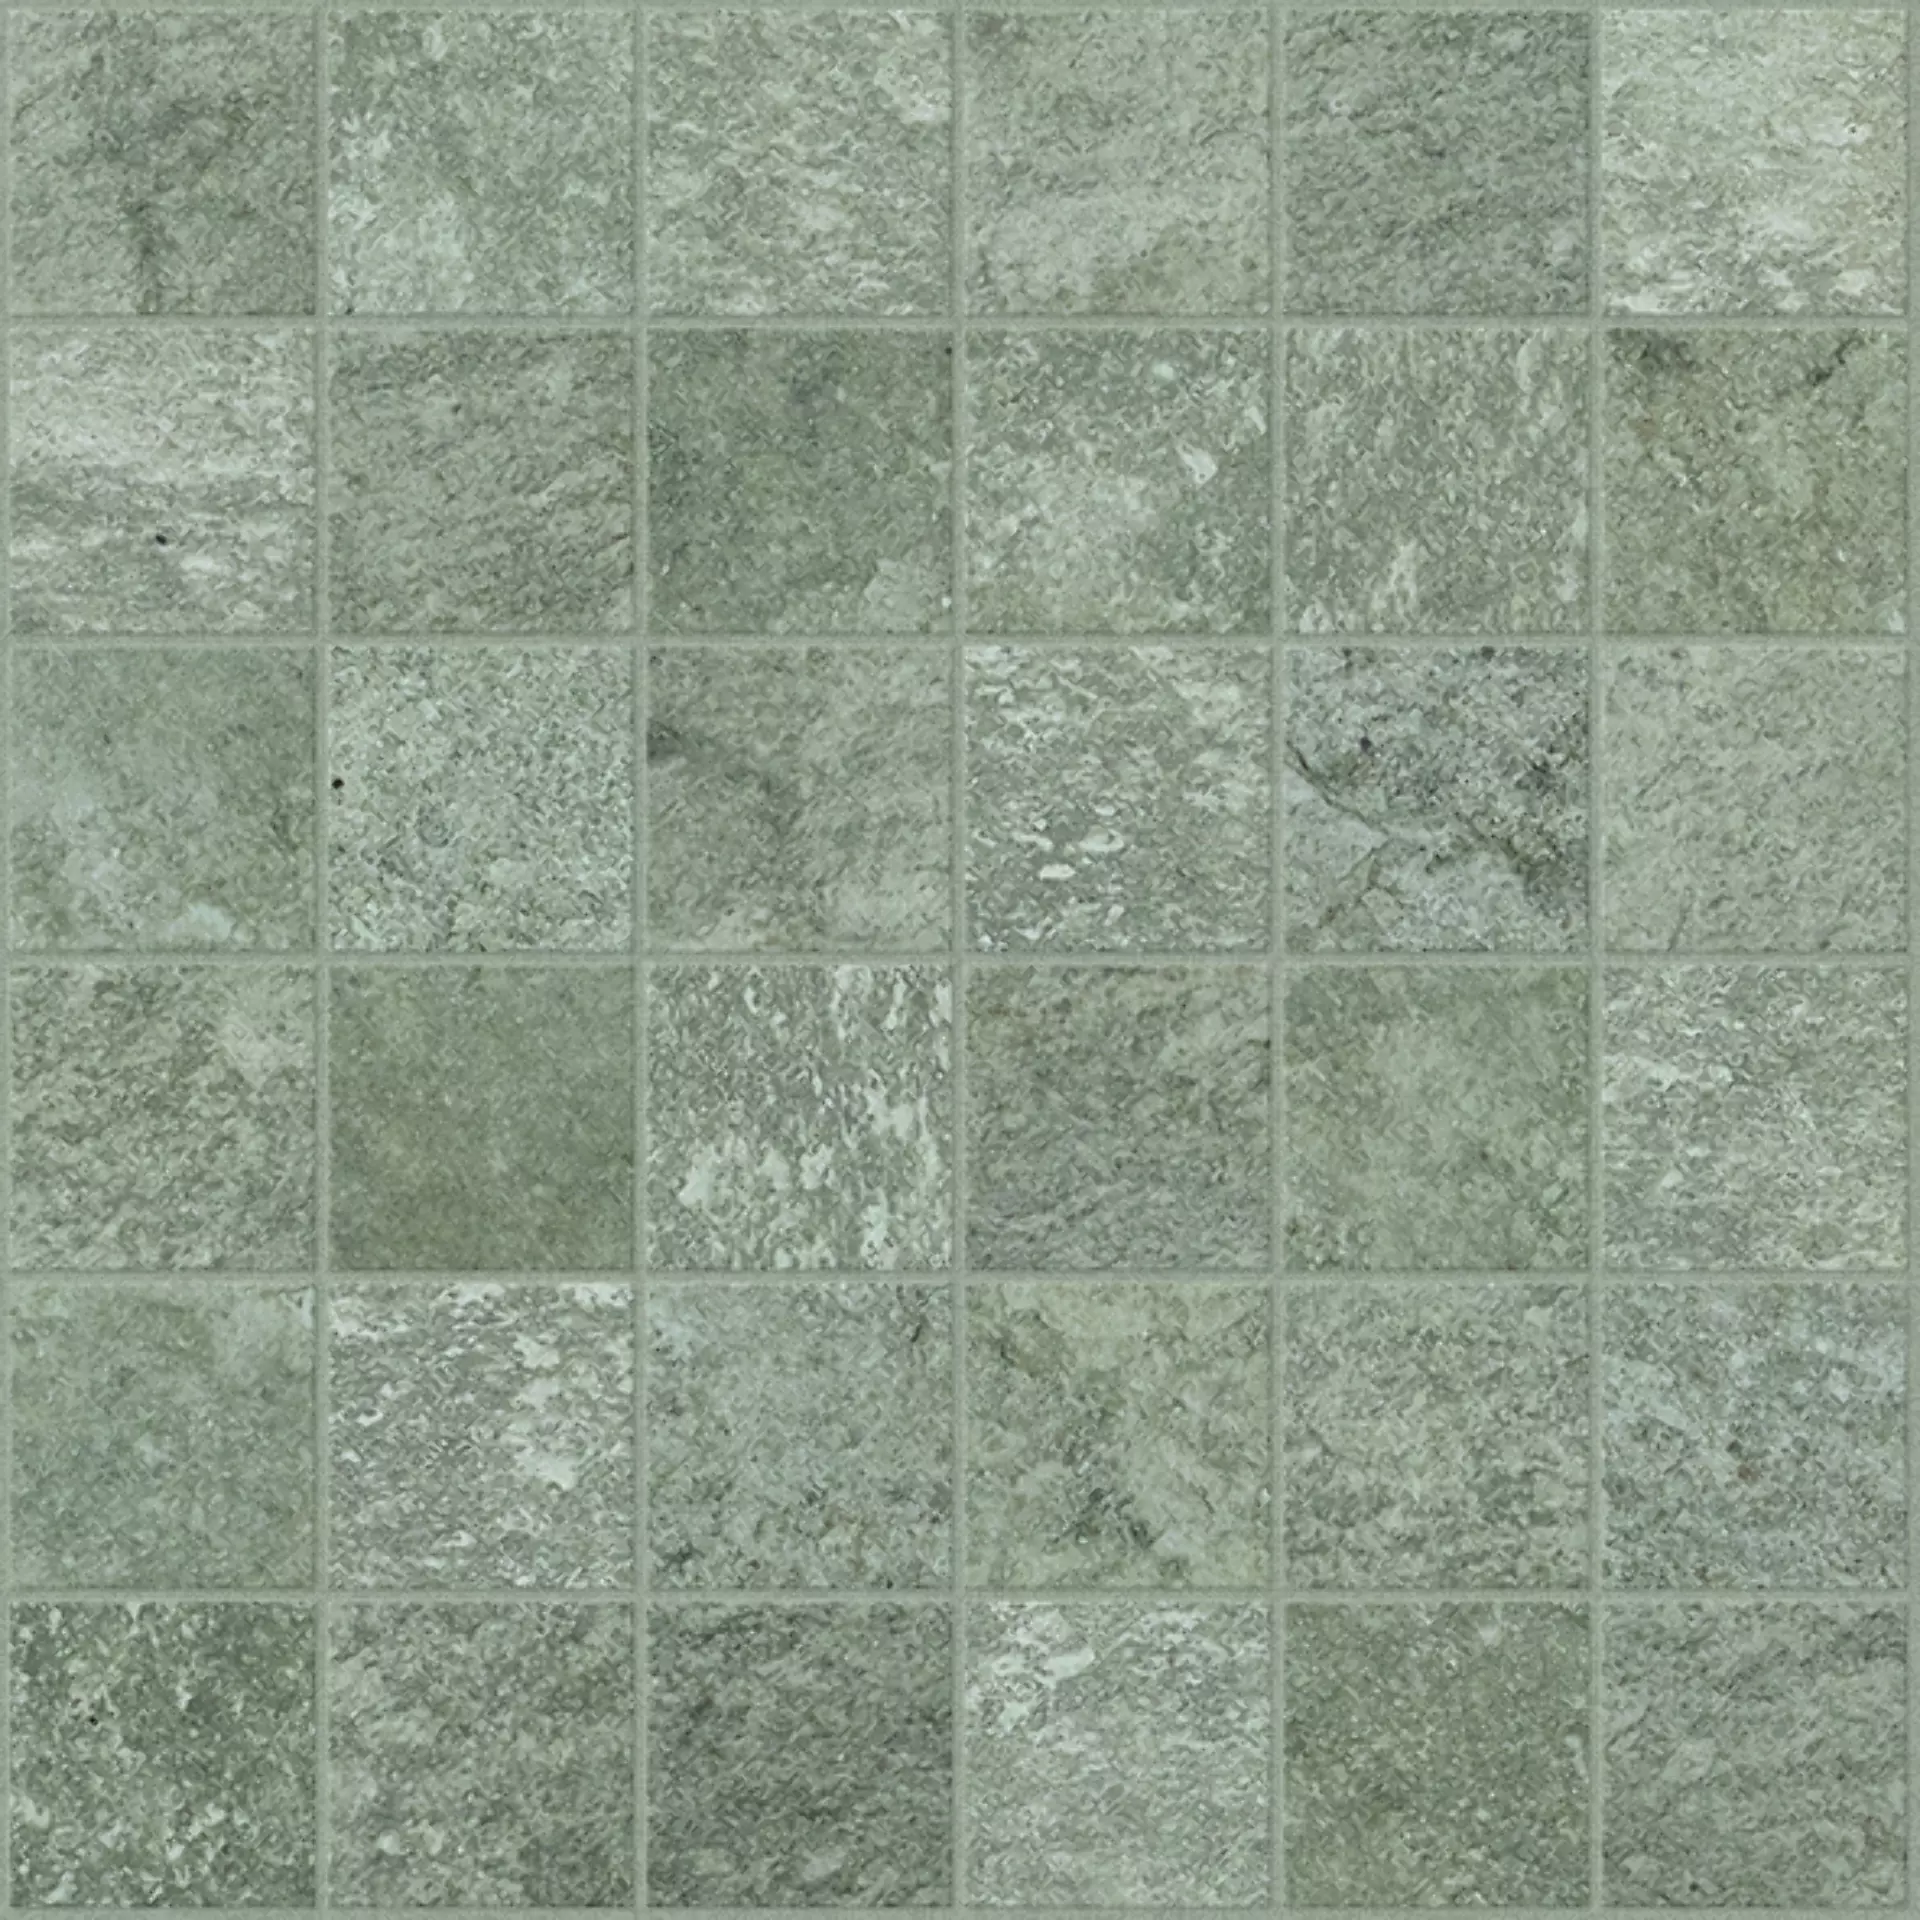 Cercom Absolute Grey Naturale Mosaic 5X5 1076676 30x30cm rectified